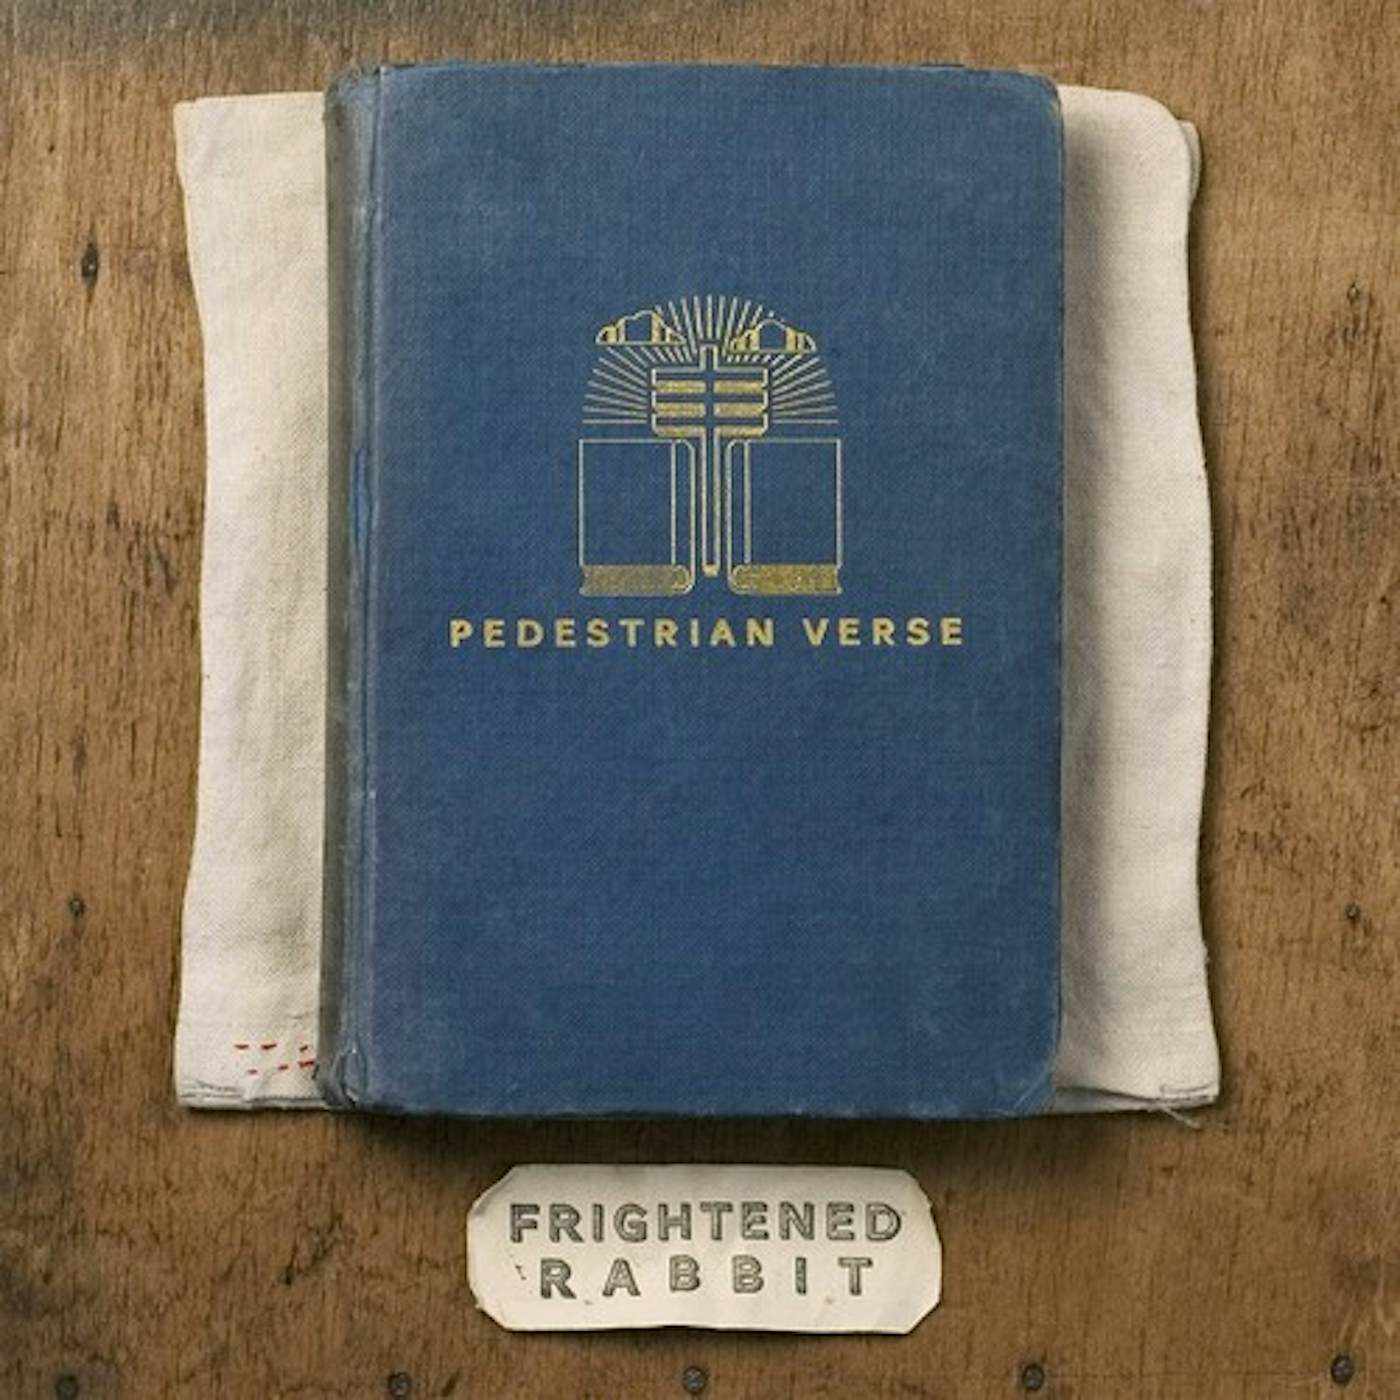 Frightened Rabbit PEDESTRIAN VERSE (10TH ANNIVERSARY EDITION) CD